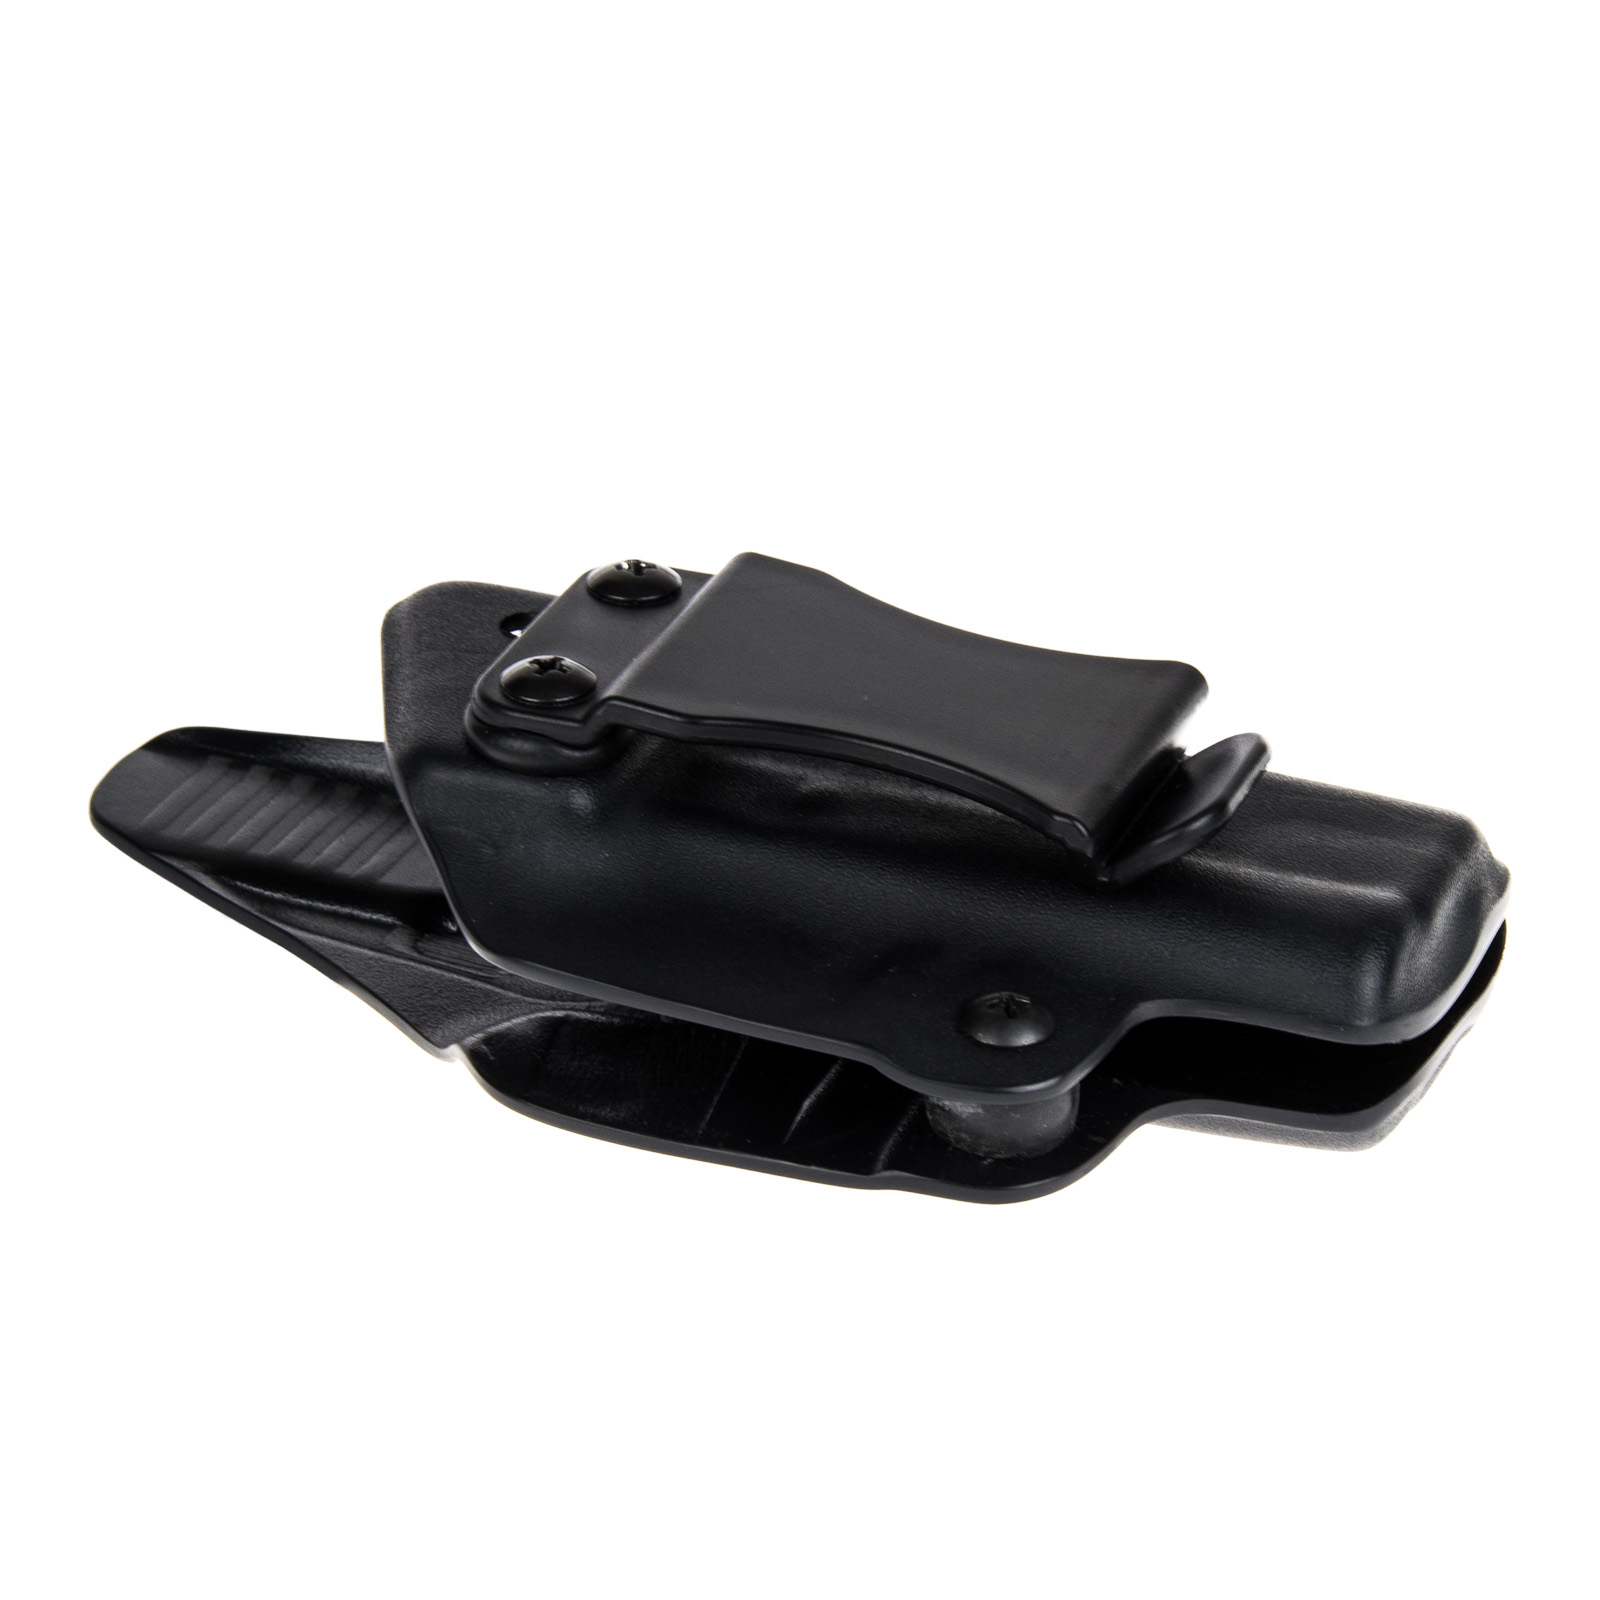 Vnitřní pouzdro RHholster, plný sweatguard, černá/černá (CZ 75 SP-01 Shadow)